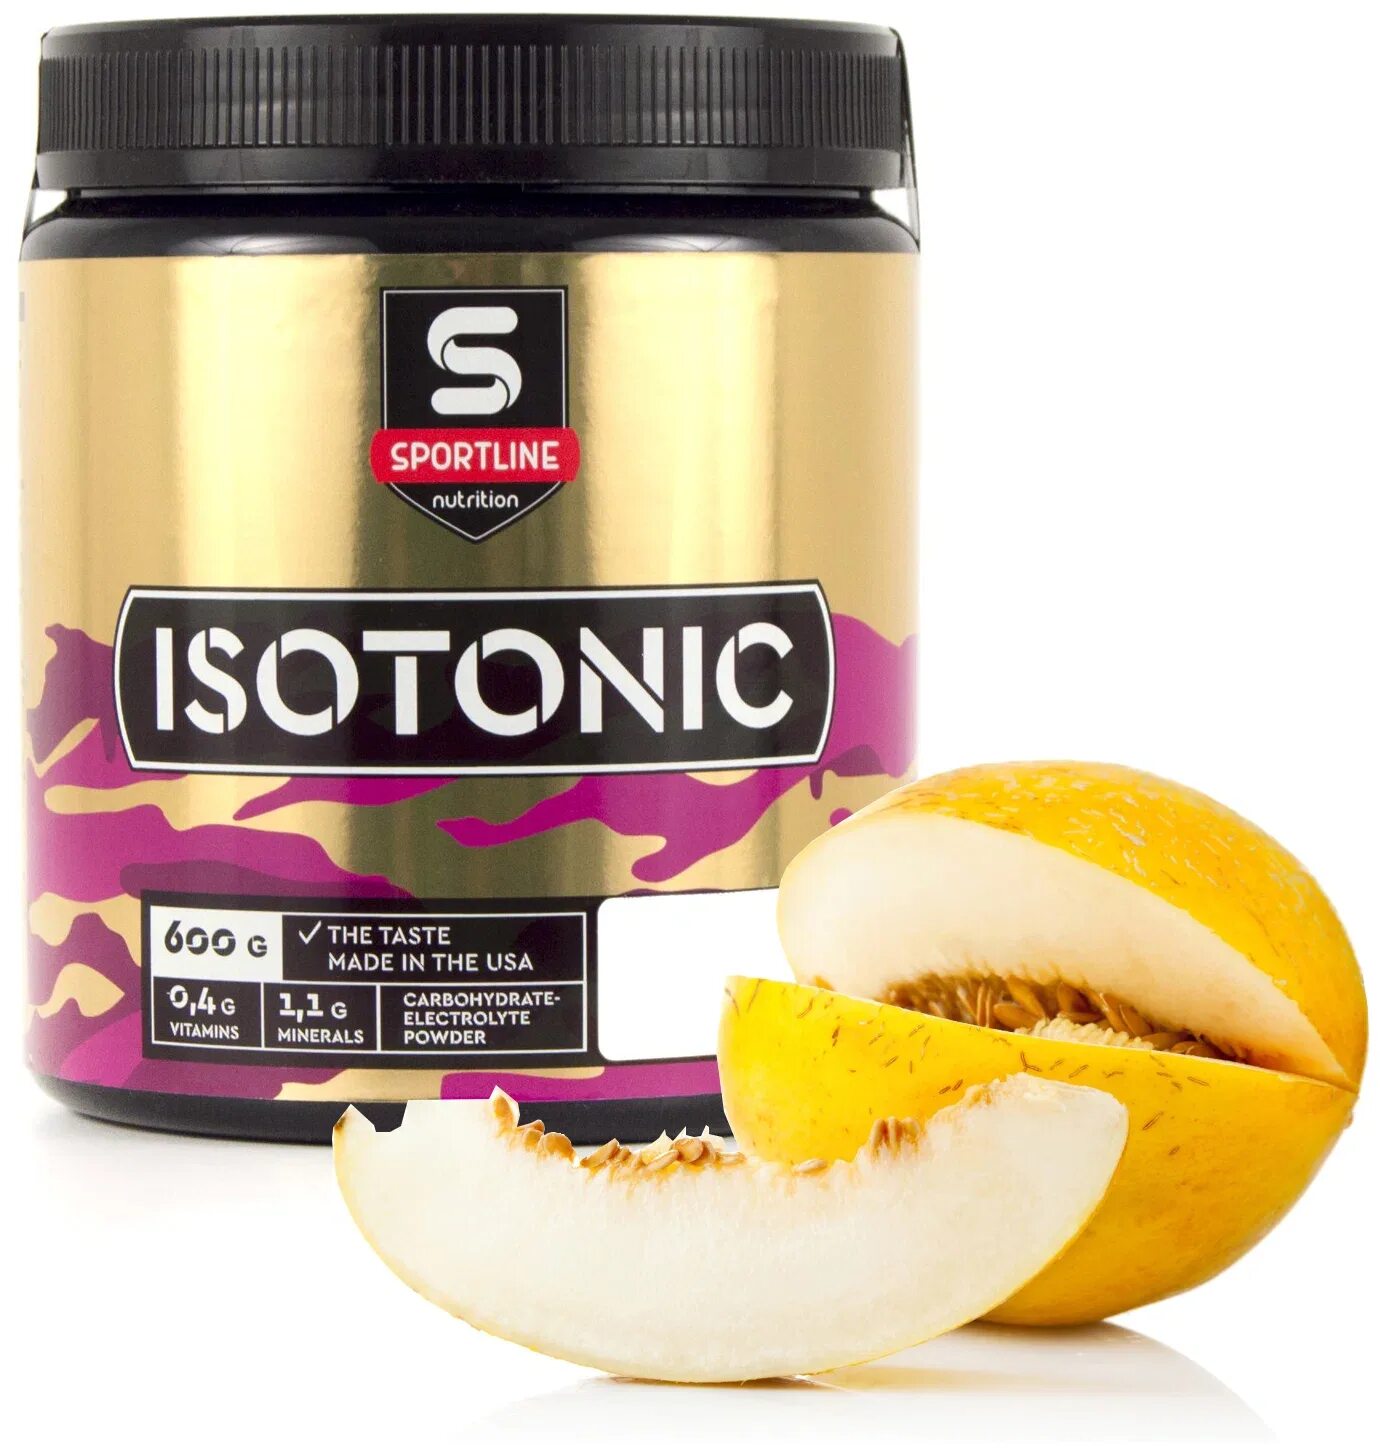 Sportline Nutrition Isotonic. Sportline Nutrition Isotonic напиток. S Sportline изотоник. Sportline отзывы.